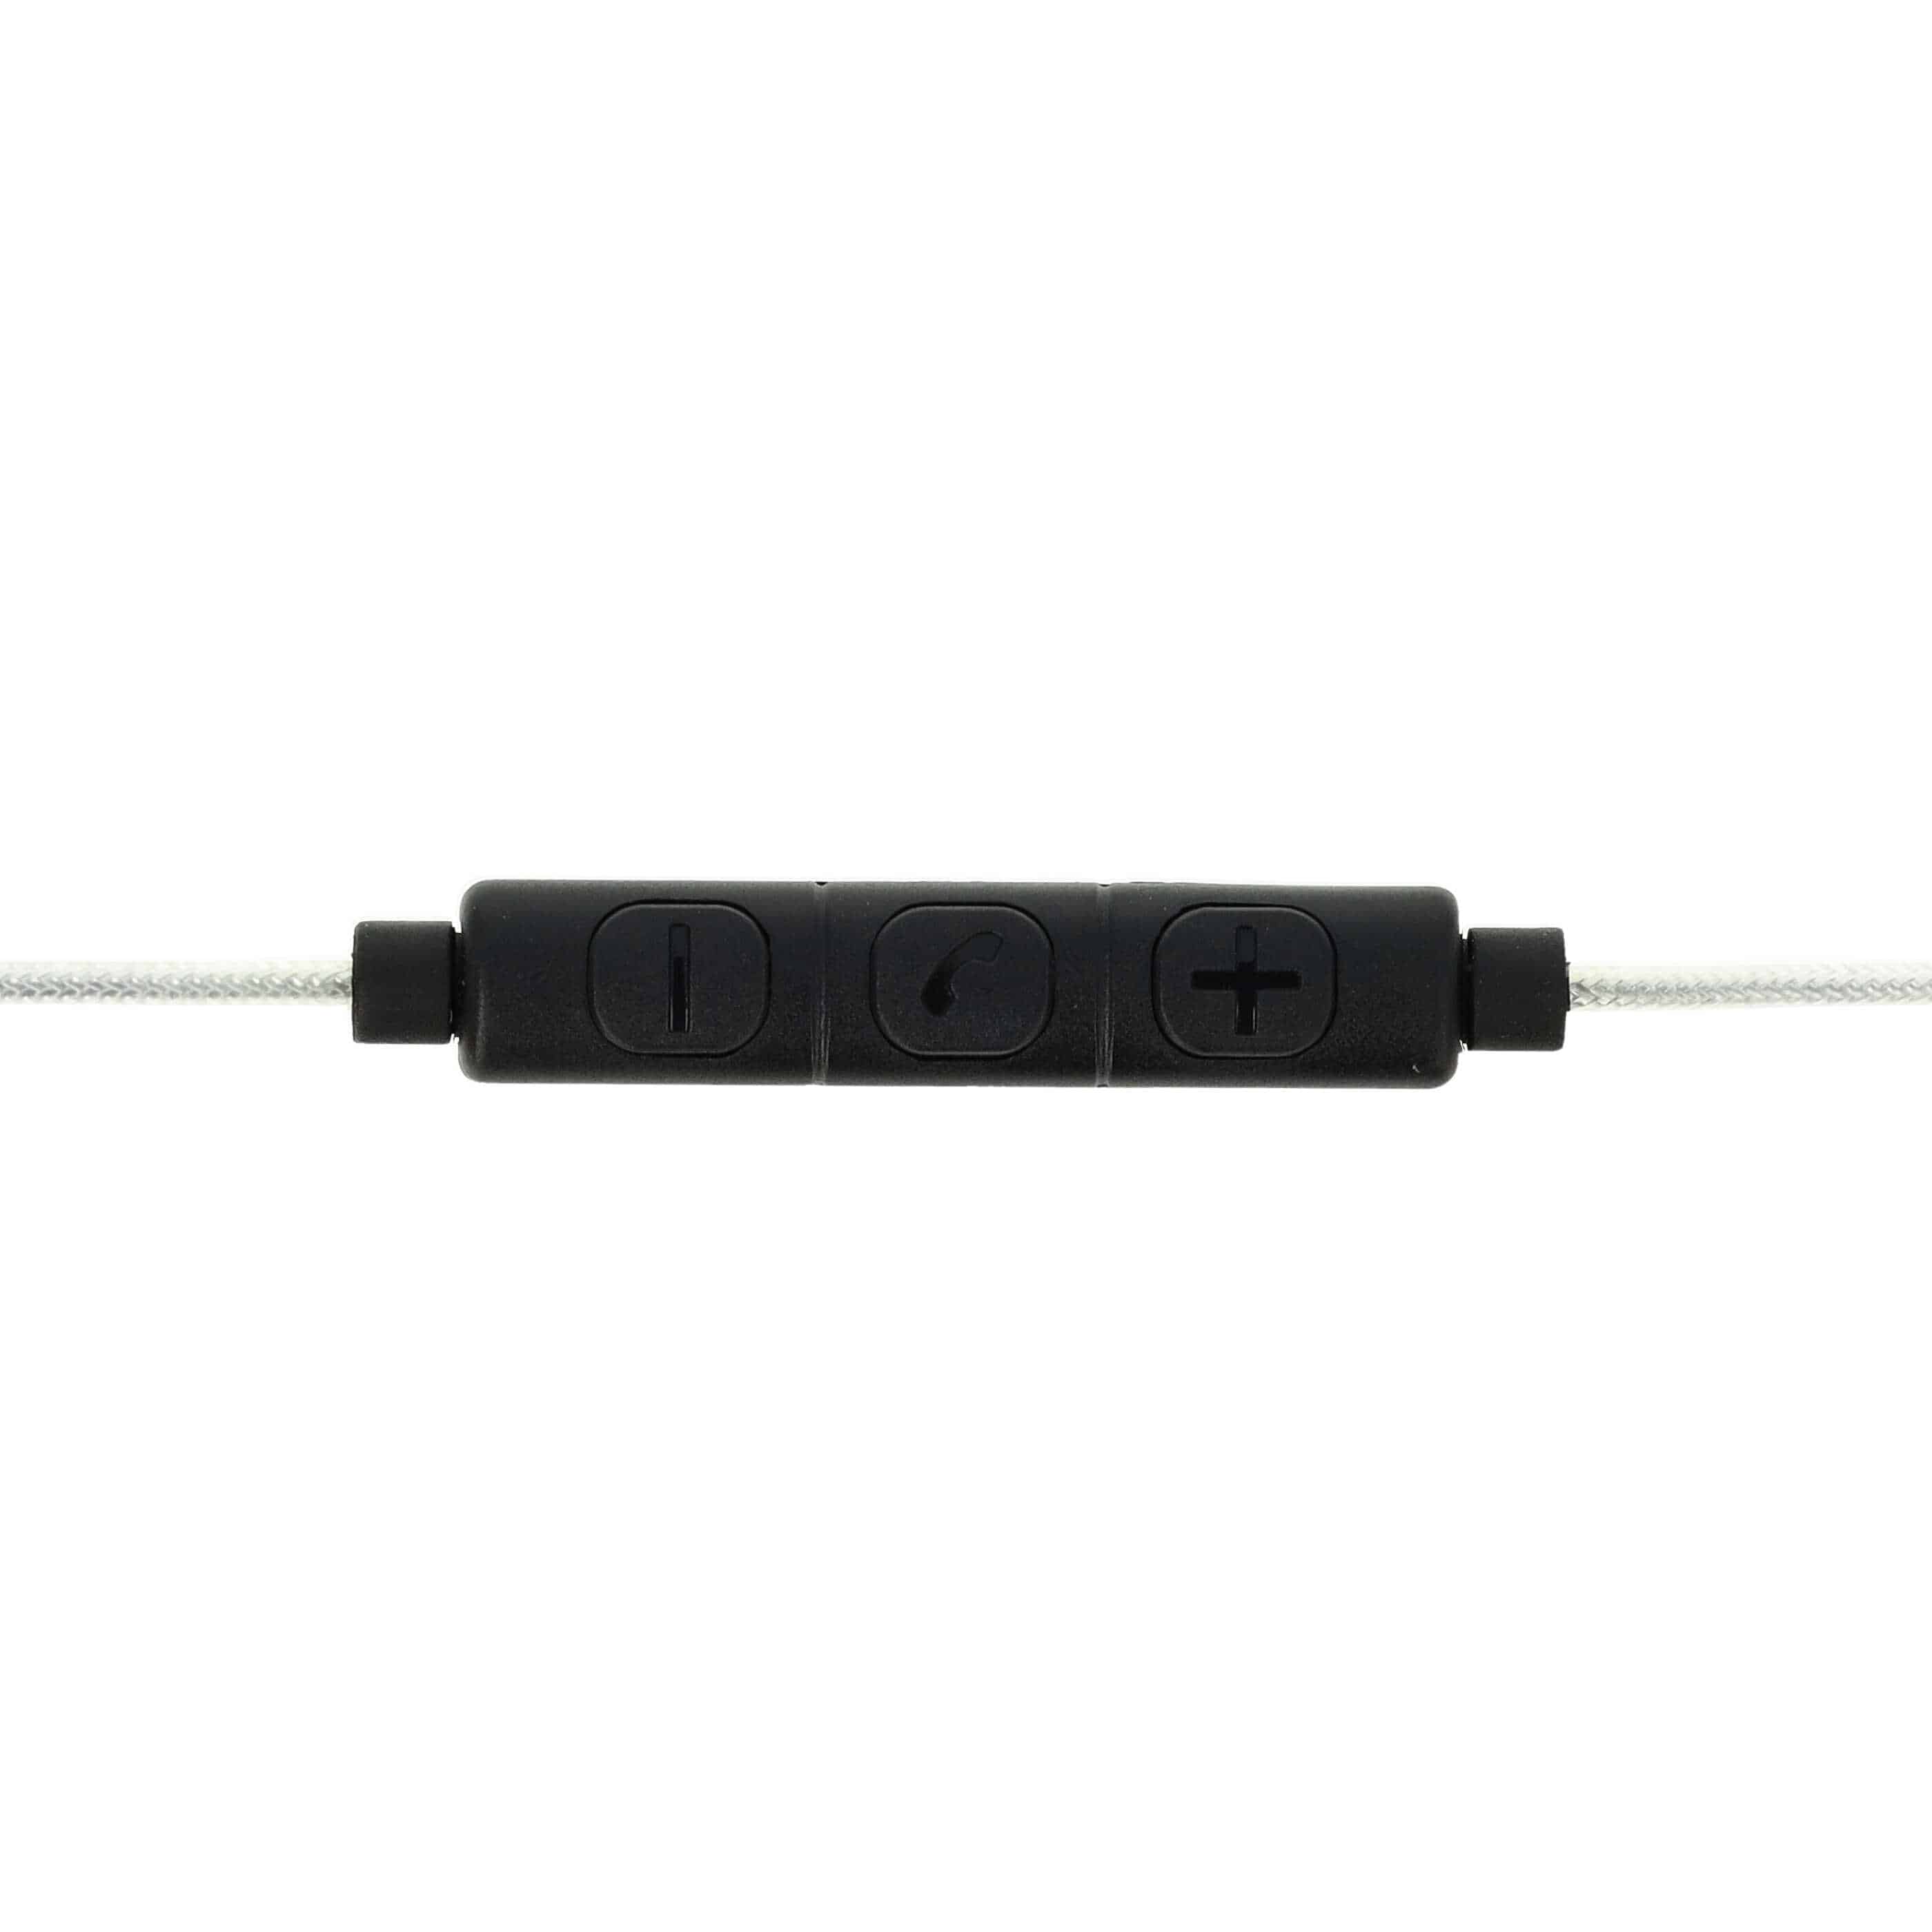 Kabel do słuchawek SE215 Shure - srebrny, 120 cm